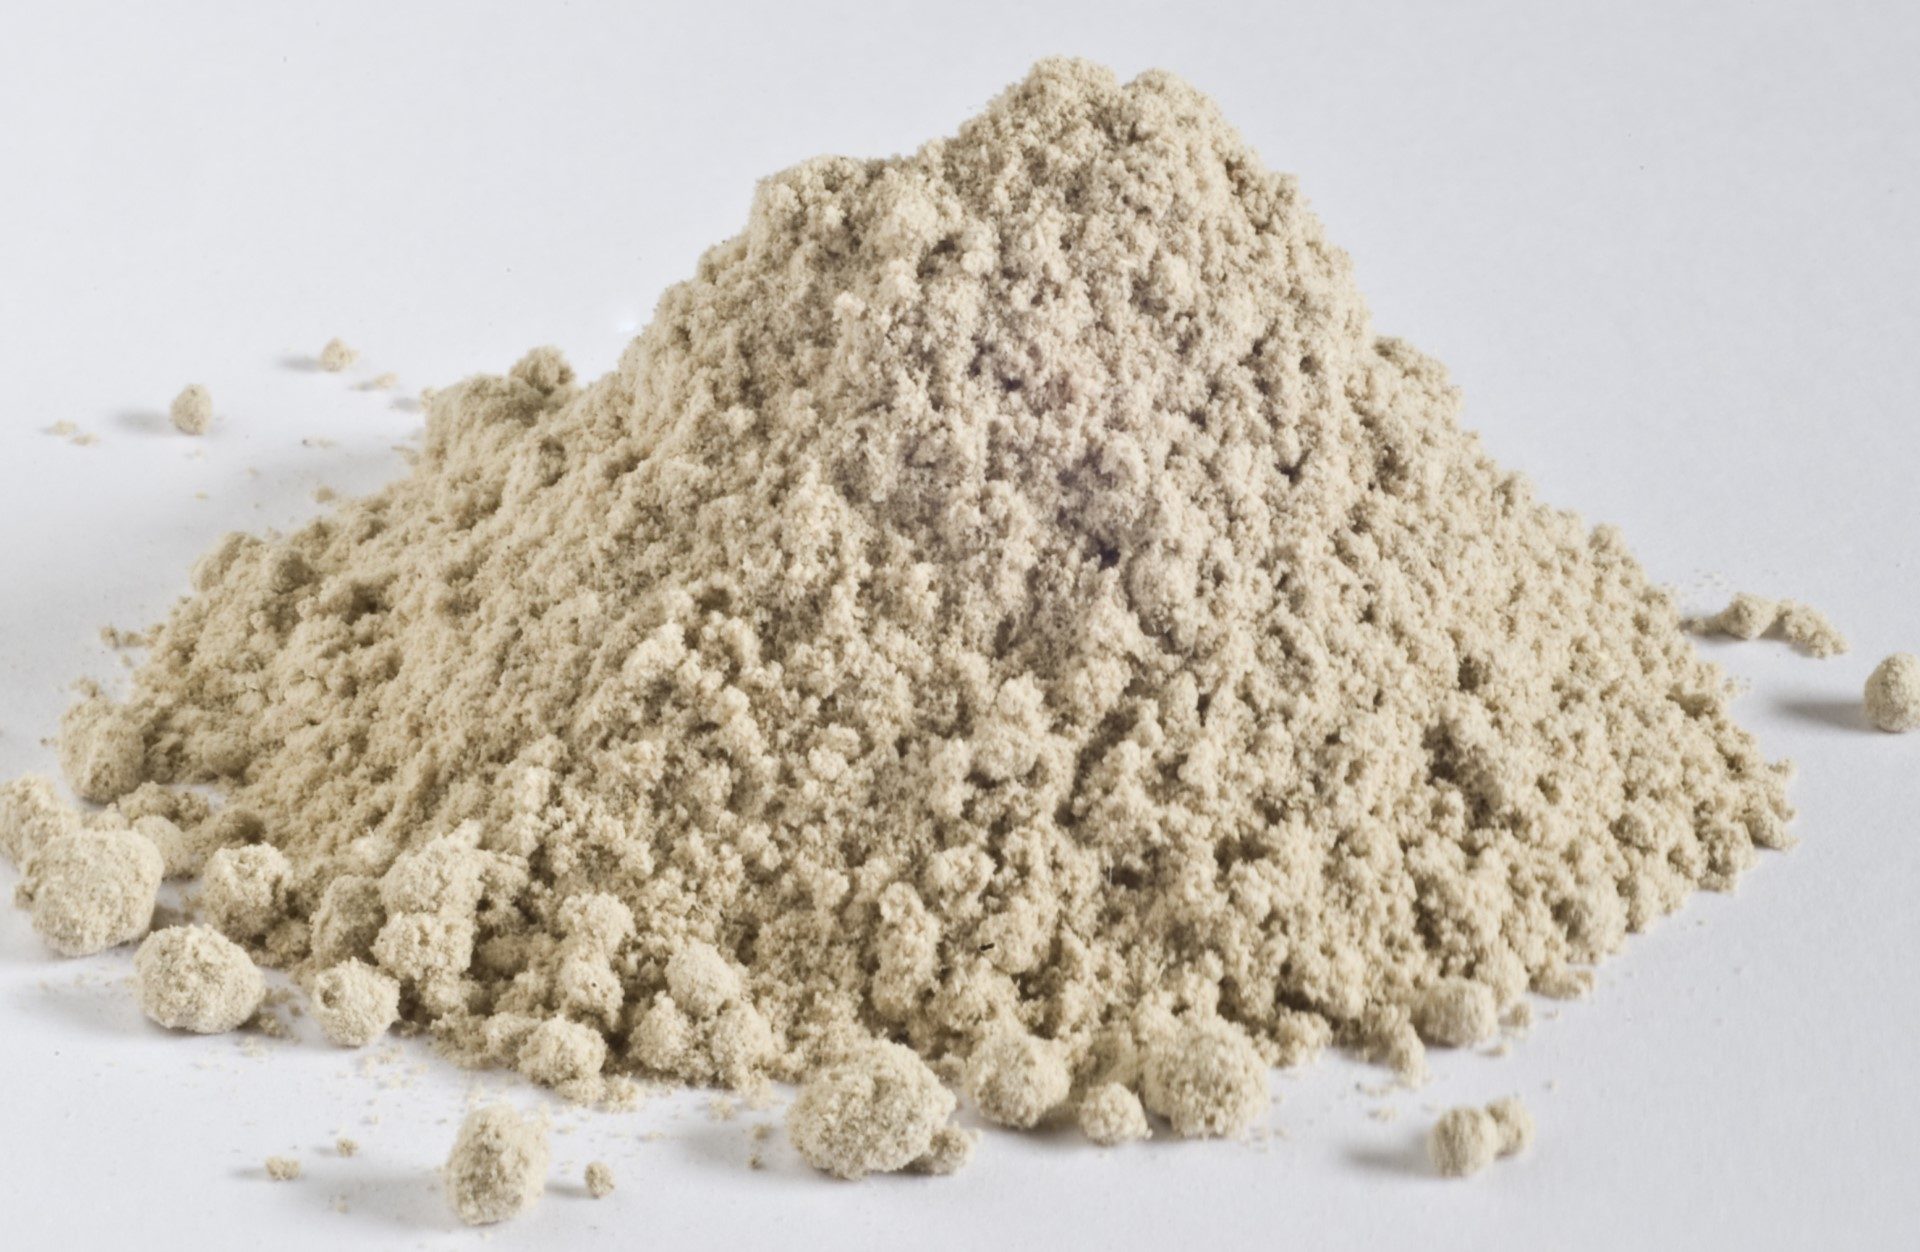 Red Maca powder (Organic) - Dried Herb (bulk) (Lepidium meyenii)